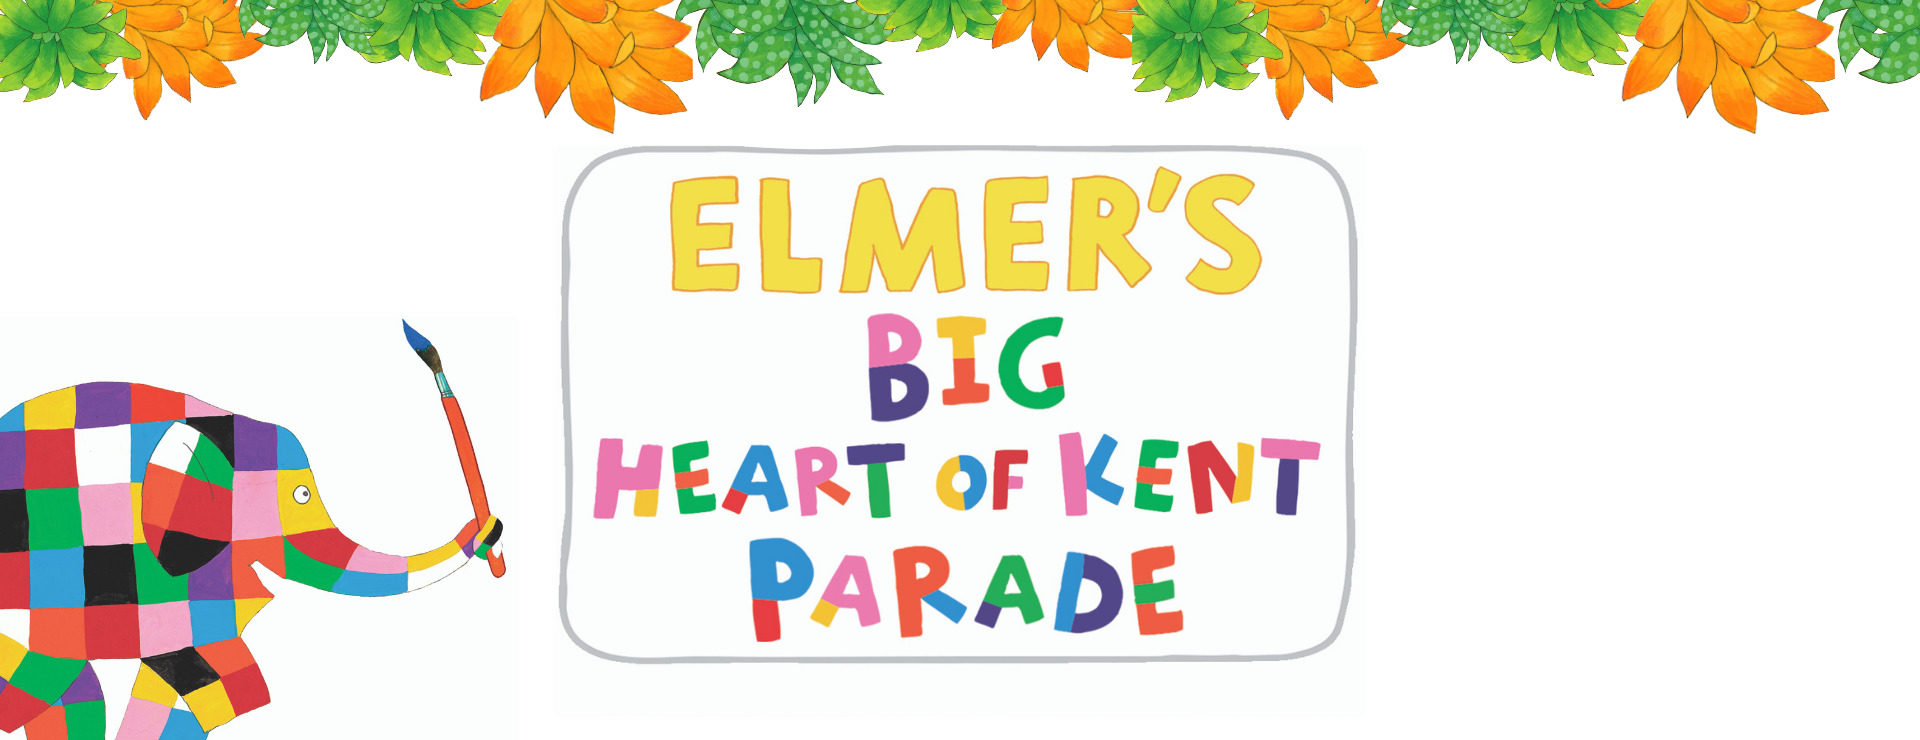 Elmer's 'Big Heart of Kent Parade', sponsored by KIMS Hospital